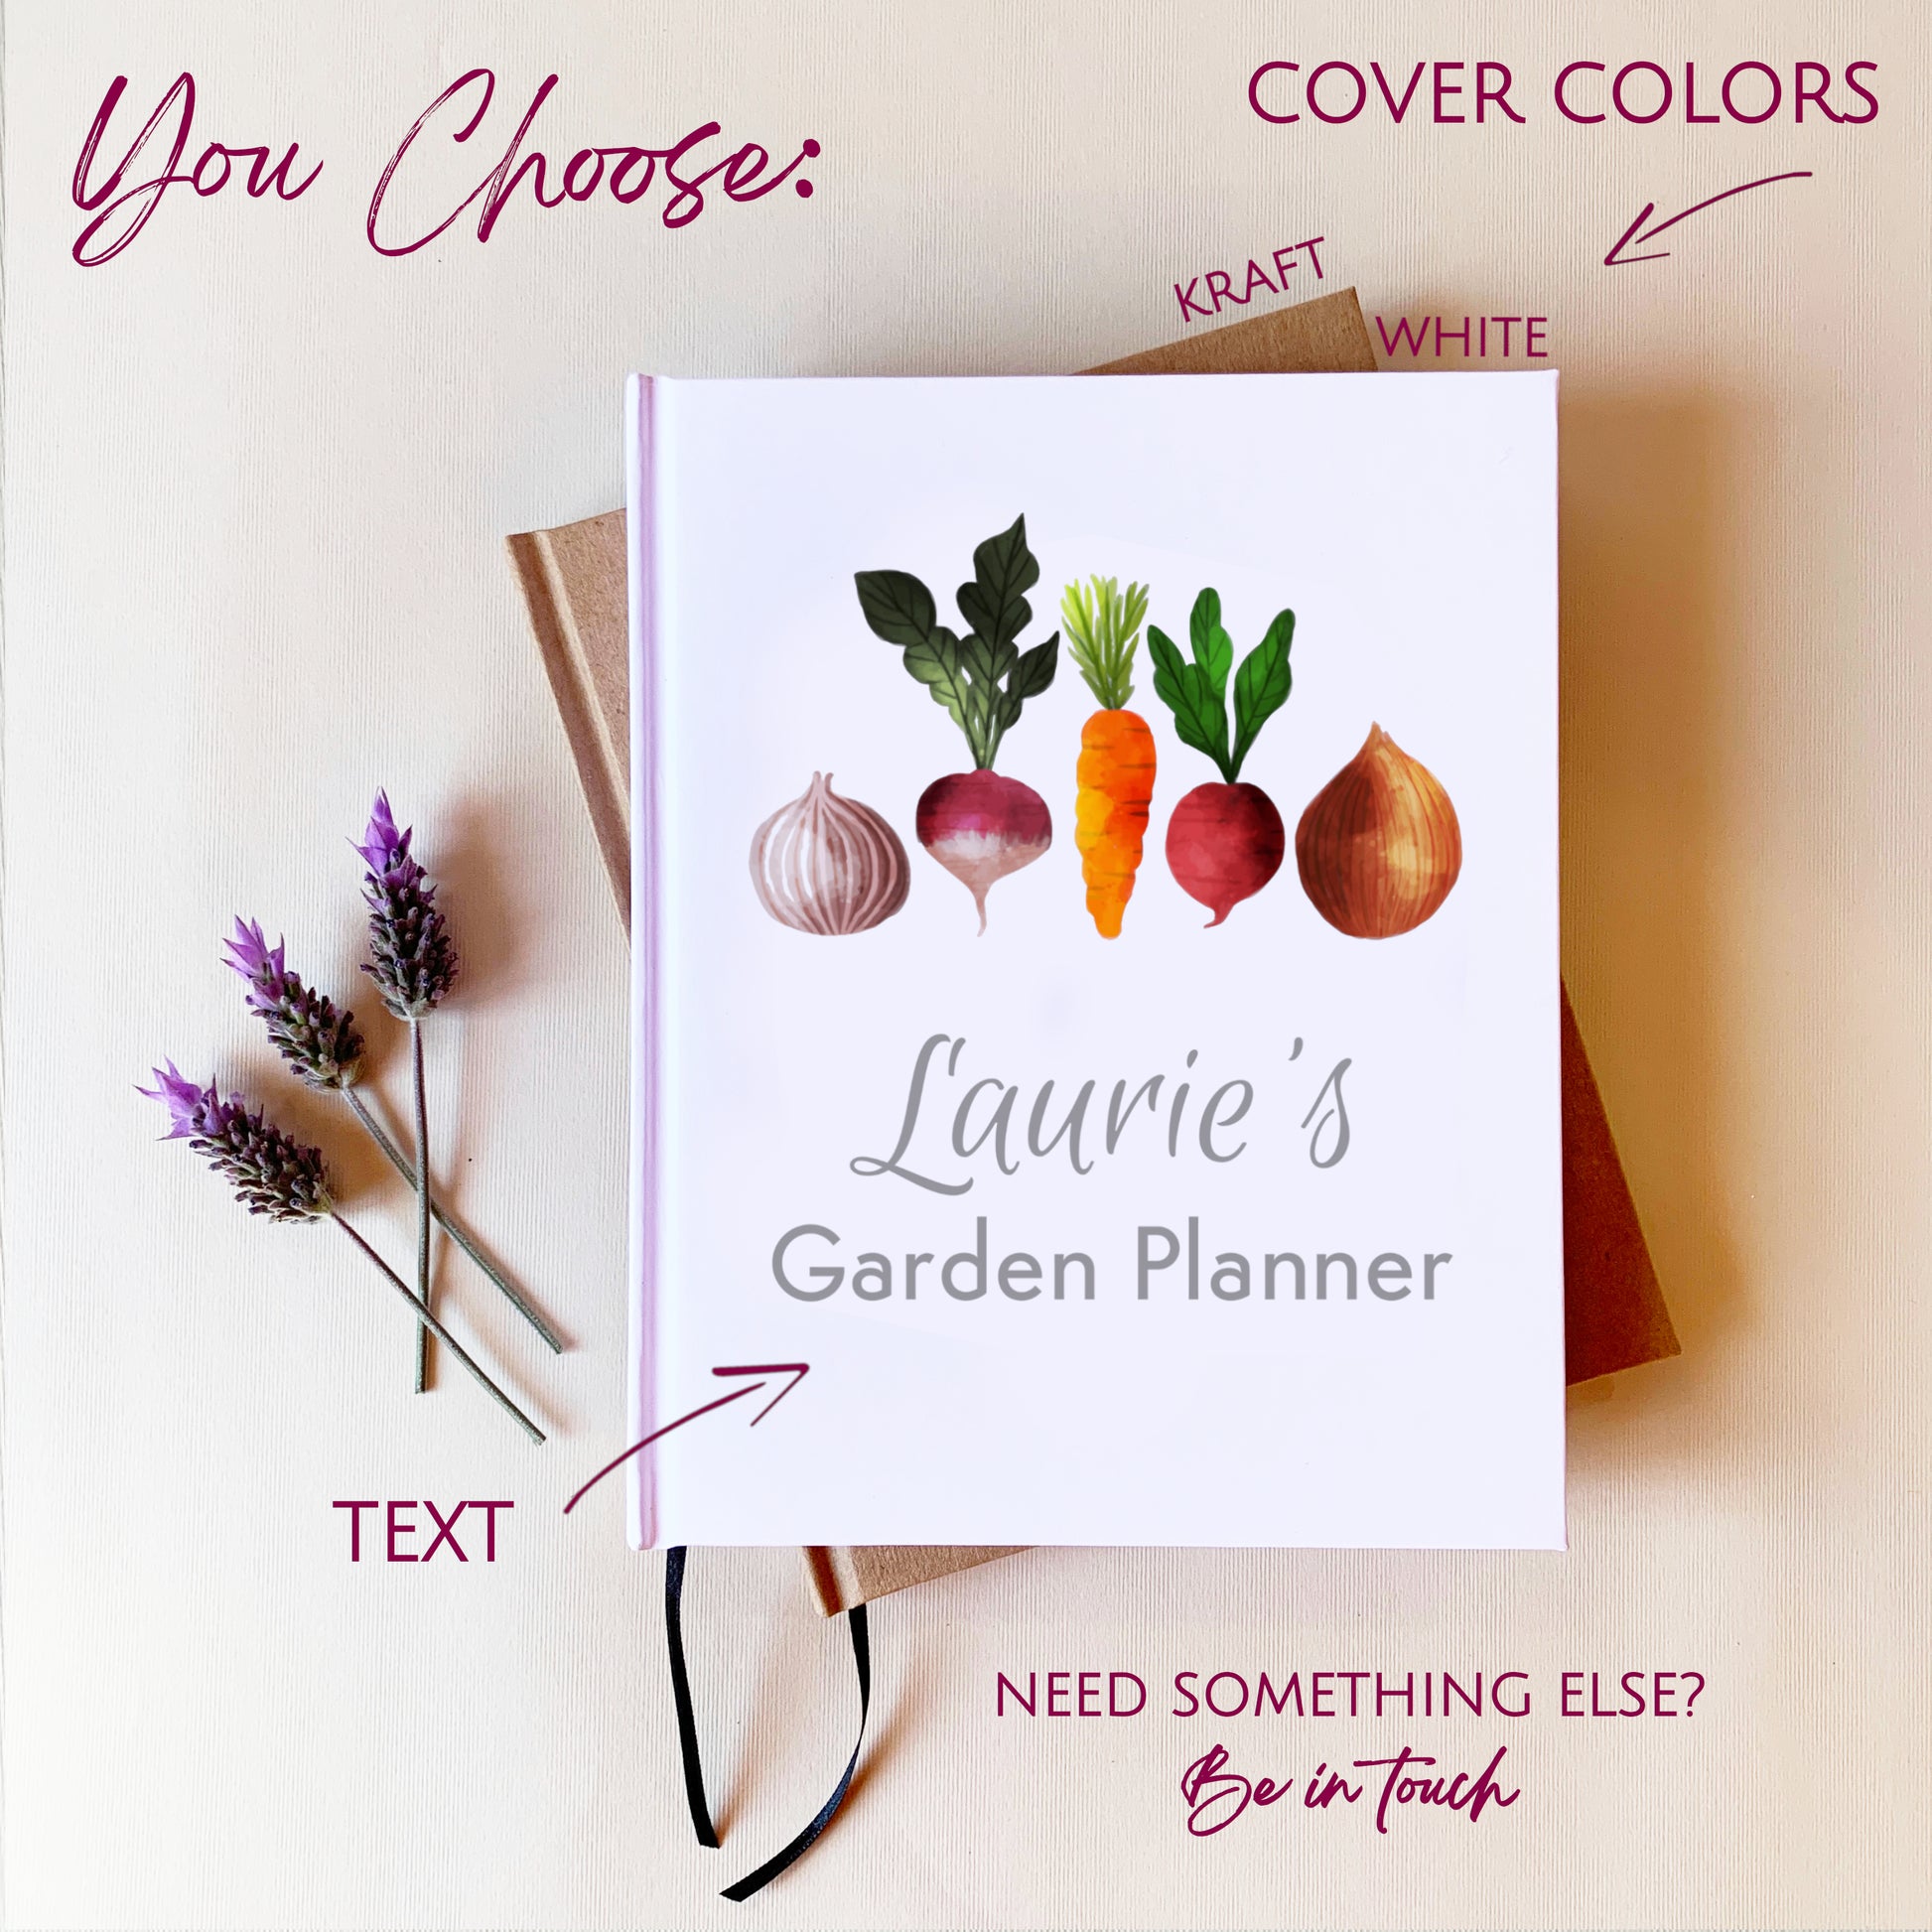 Custom Garden Journal · Thoughtful Gardening Gift for Planning, Layout & Organizing